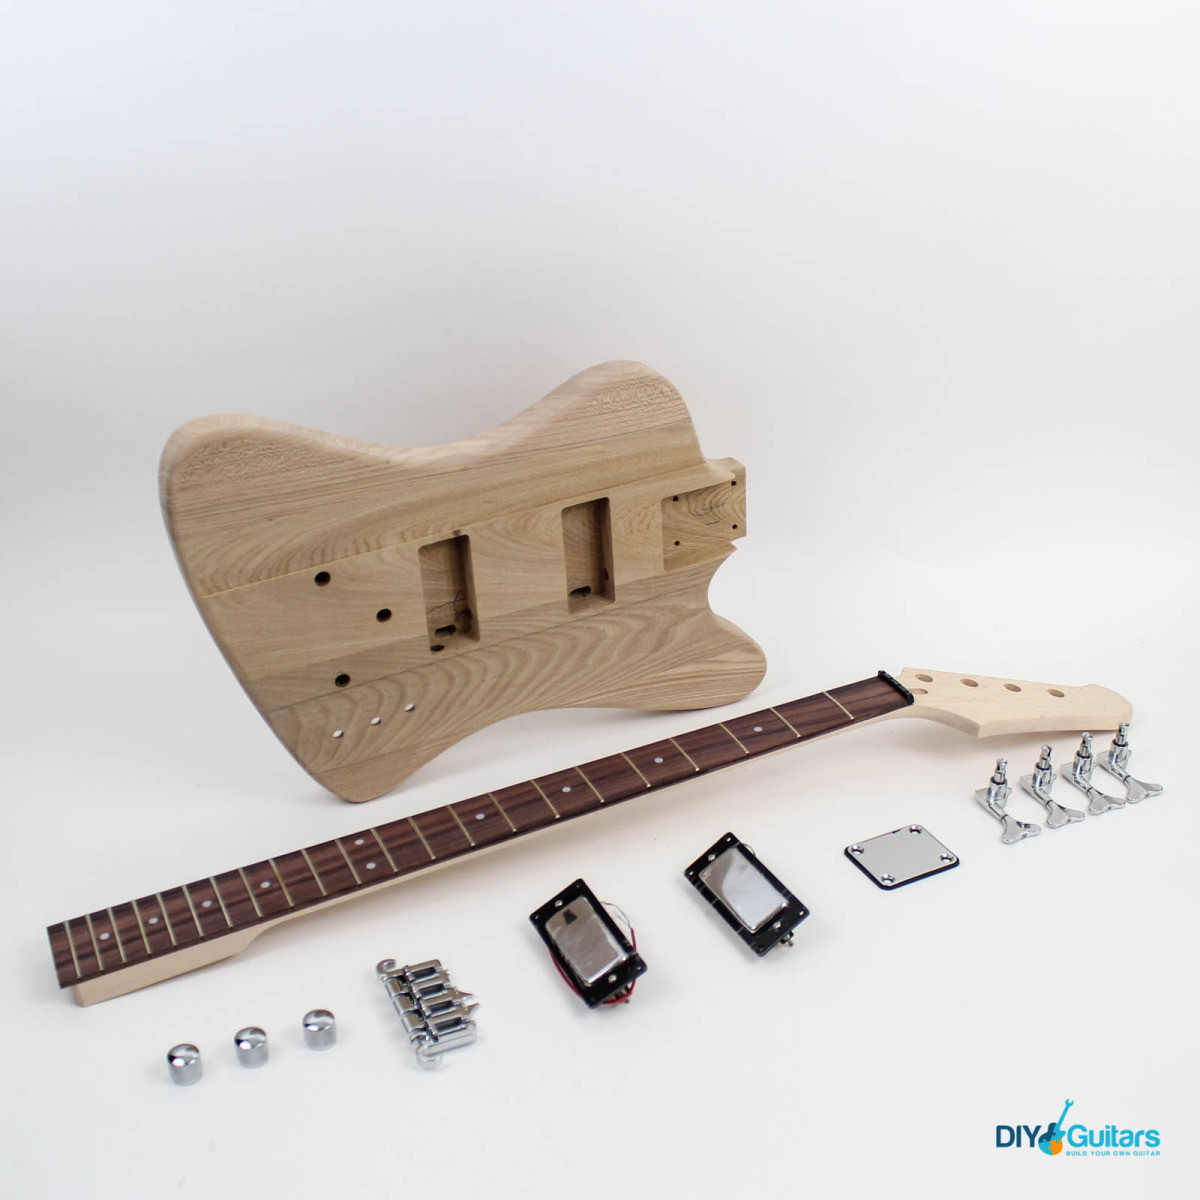 Best ideas about Bass DIY Kit
. Save or Pin Gibson Thunderbird Style Bass Guitar Kit DIY Guitars Now.